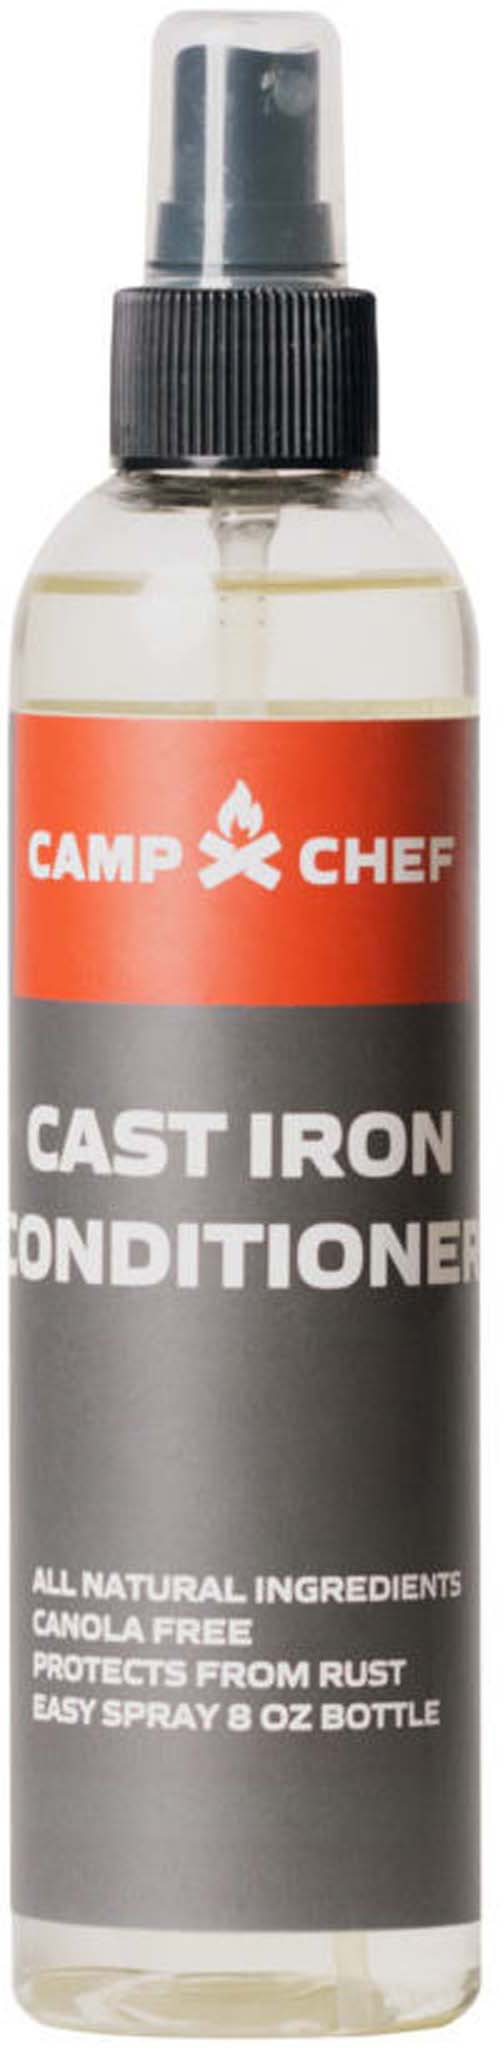 https://op2.0ps.us/original/opplanet-camp-chef-premium-cast-iron-conditioner-spray-8-oz-cscp-main-1